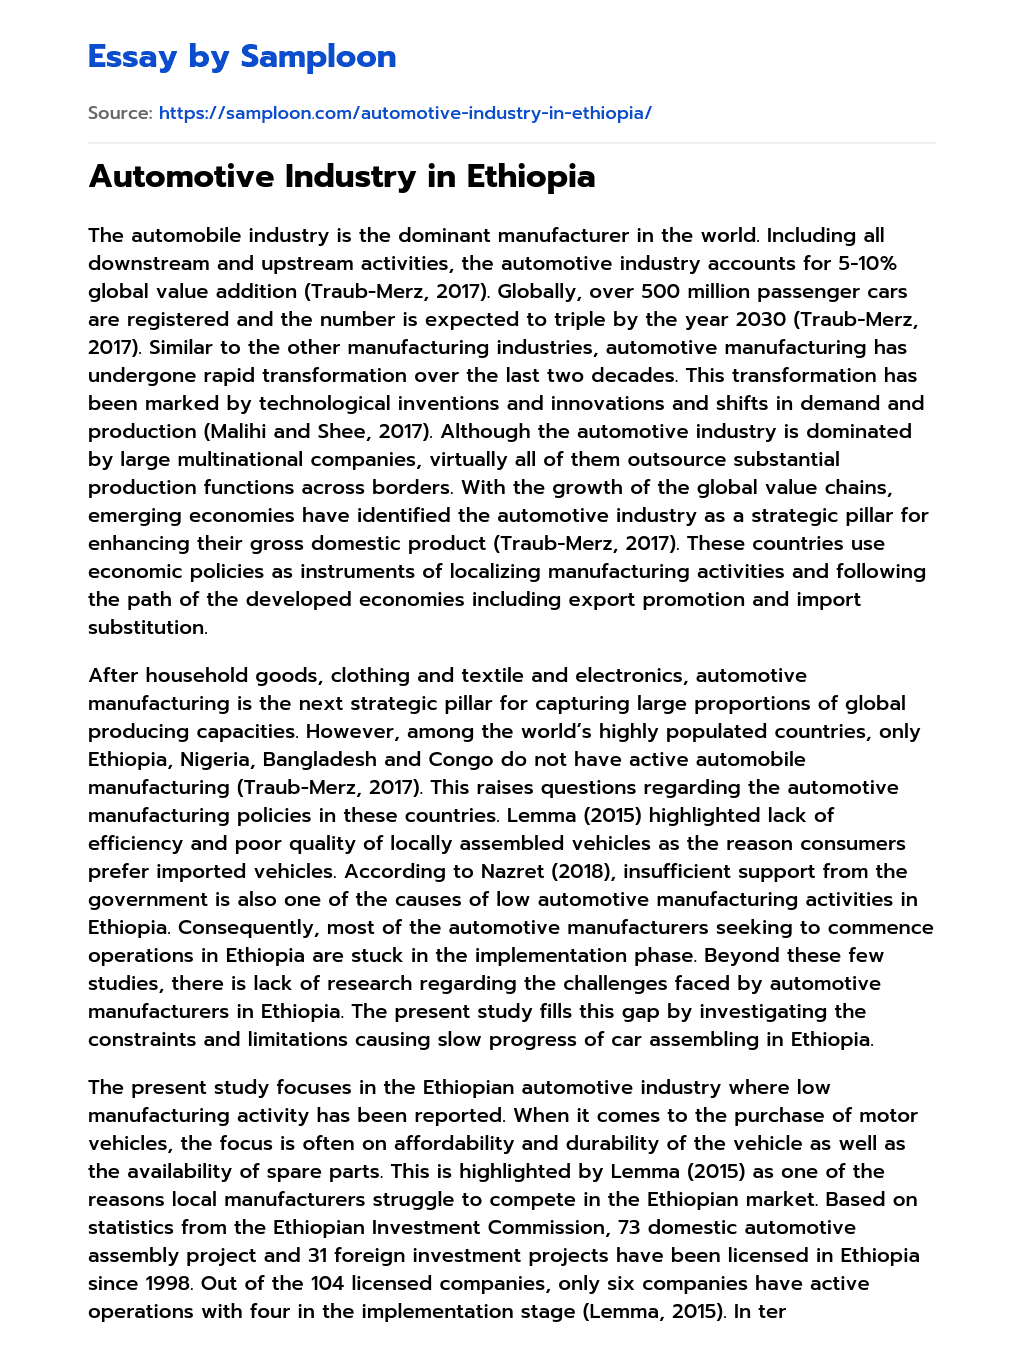 Automotive Industry in Ethiopia essay